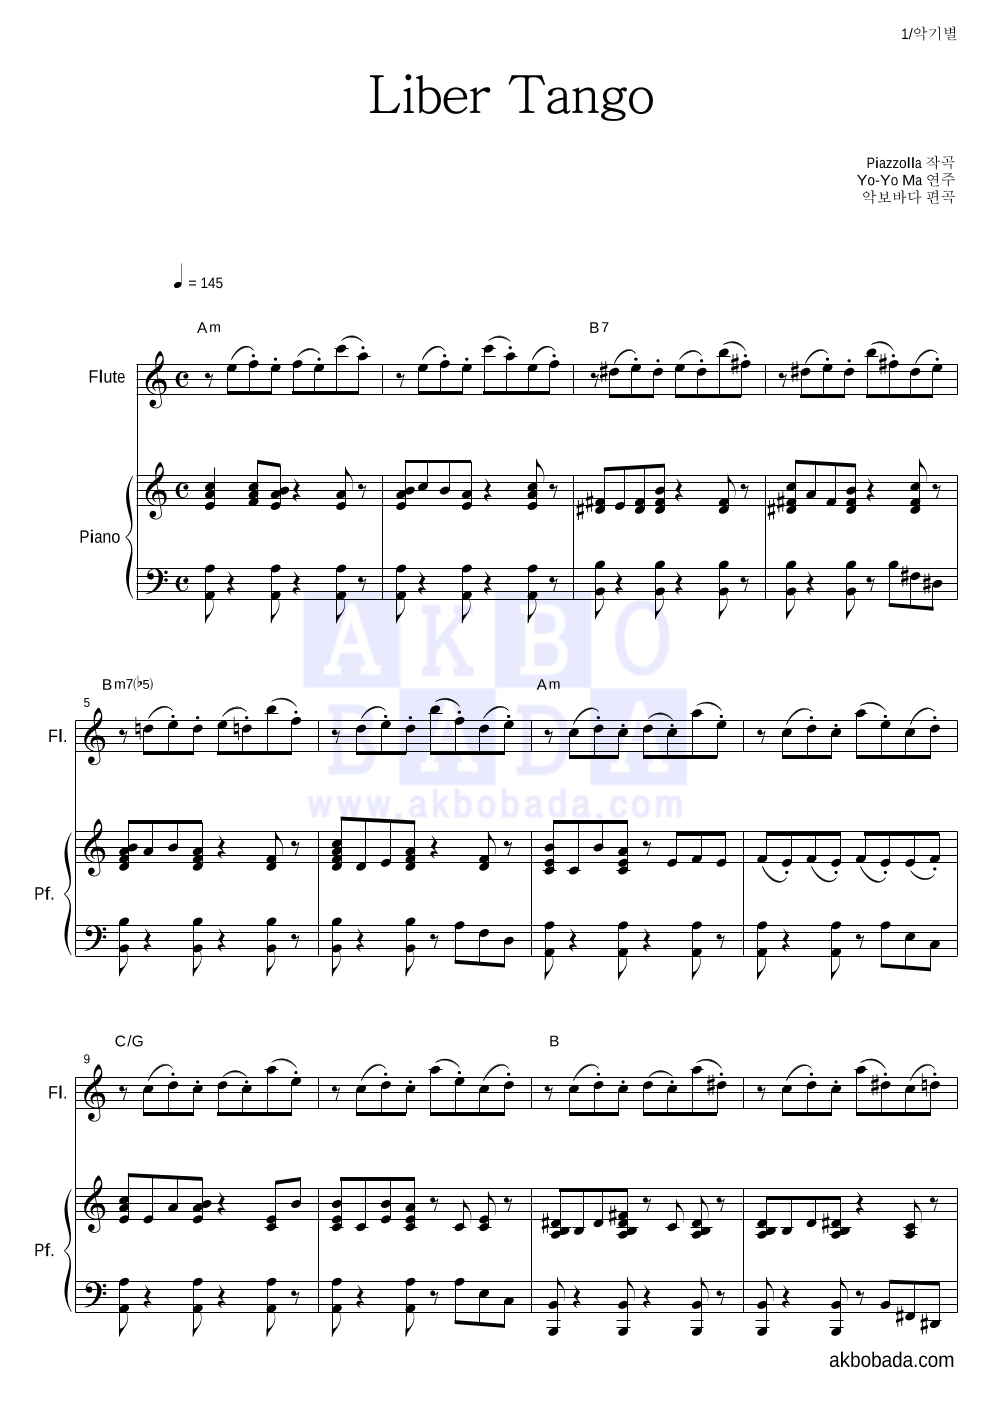 Yo-Yo Ma - Piazzolla - Libertango 플룻&피아노 악보 